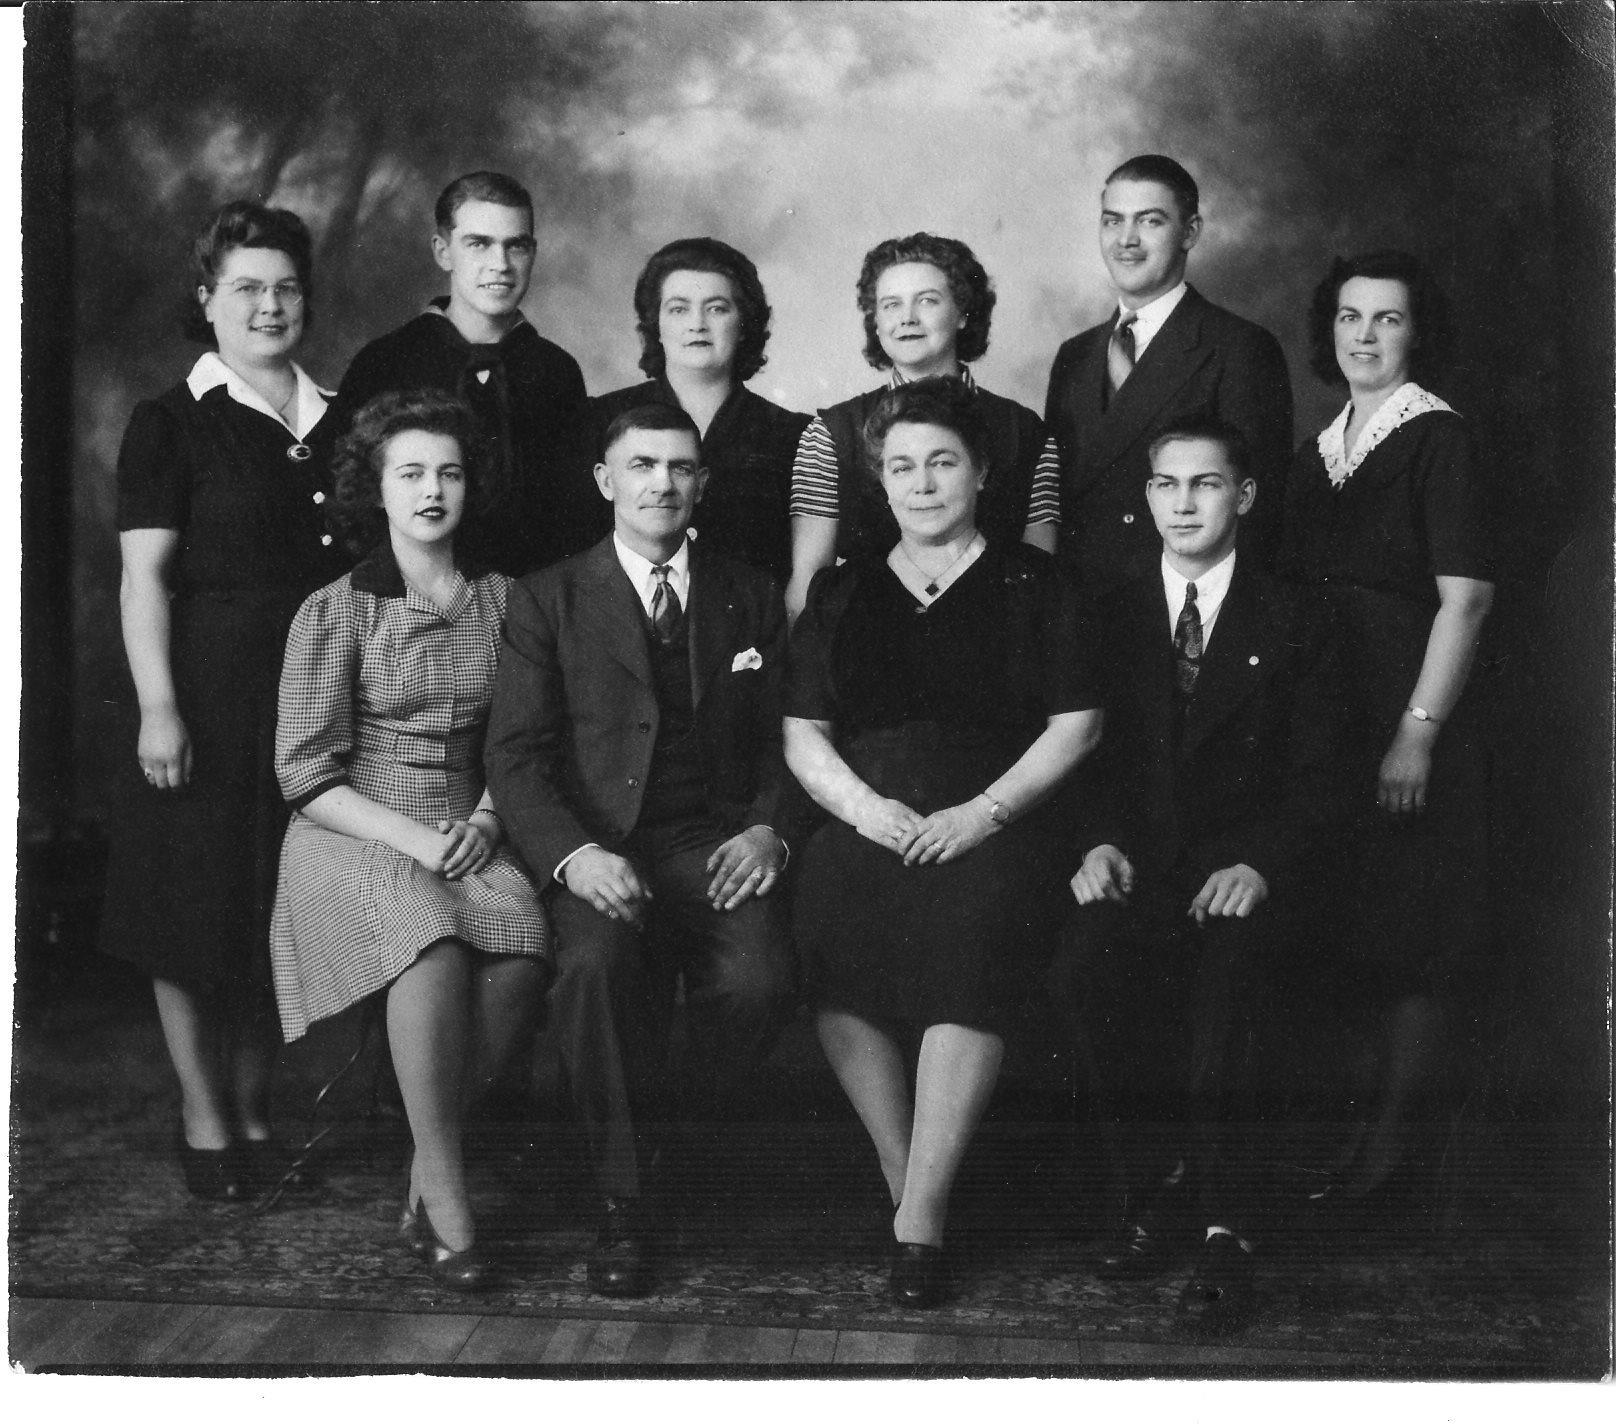 1942 - Ben & Marie Larson family Brainerd, Minnesota, USA. My father Mervin Larson is seated front row right